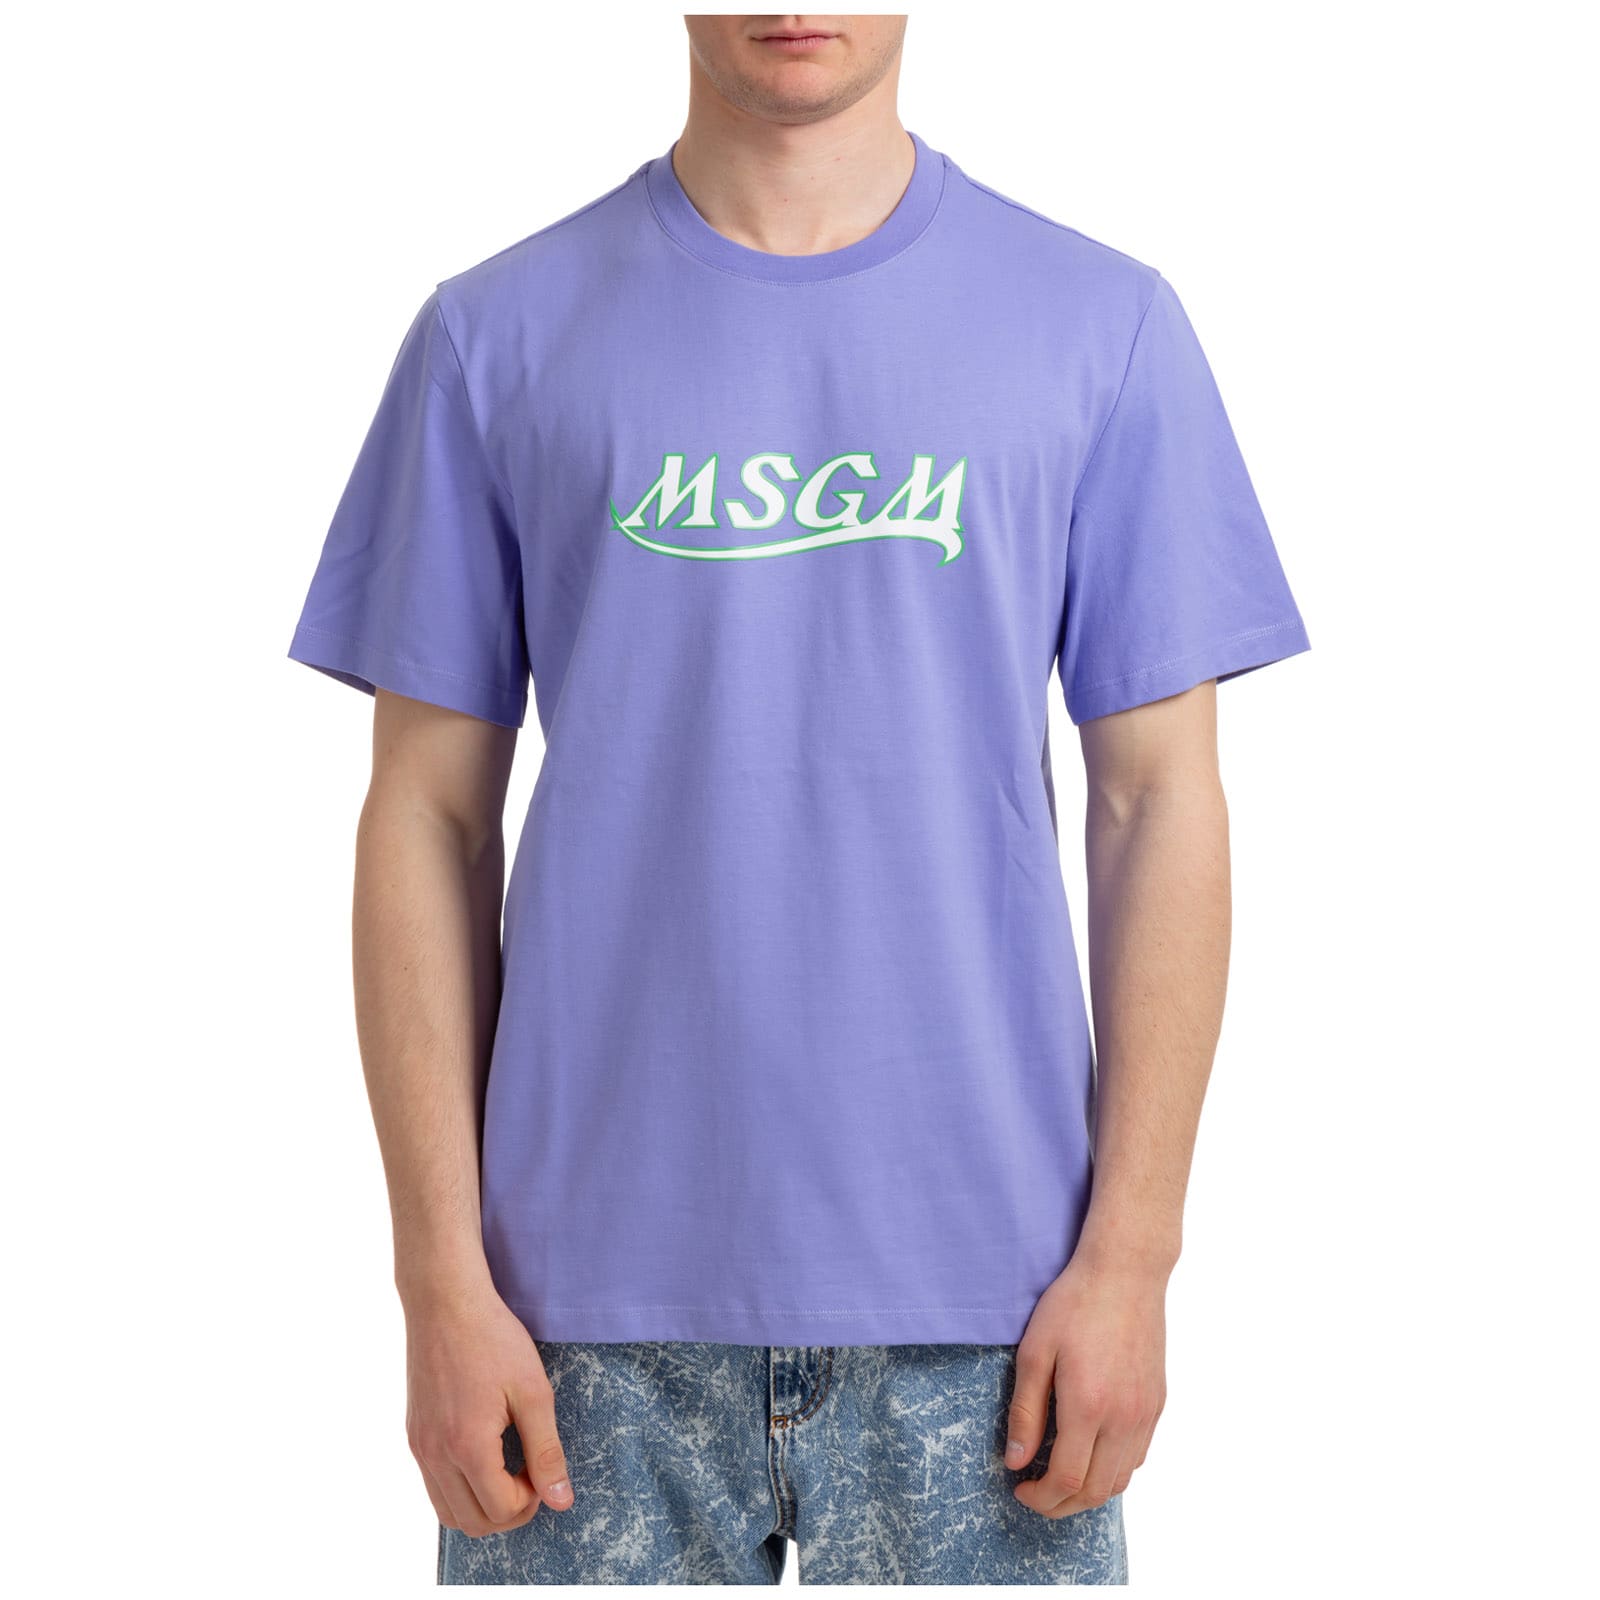 Msgm Outdoor T-shirt